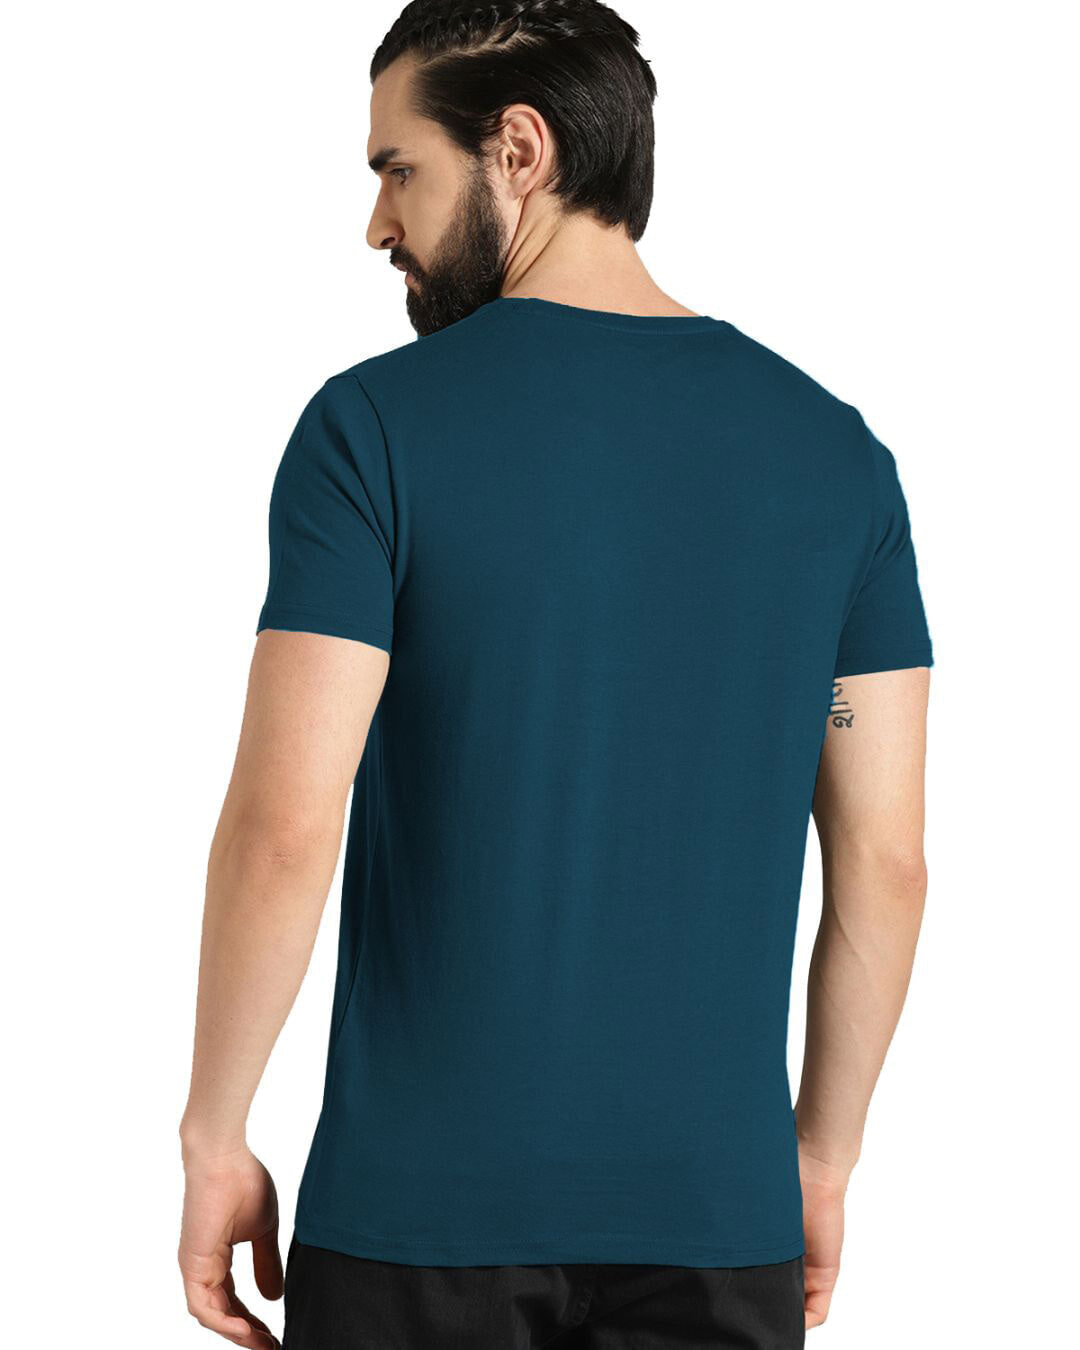 Shop Graphic Printed T-shirt for Men-Back